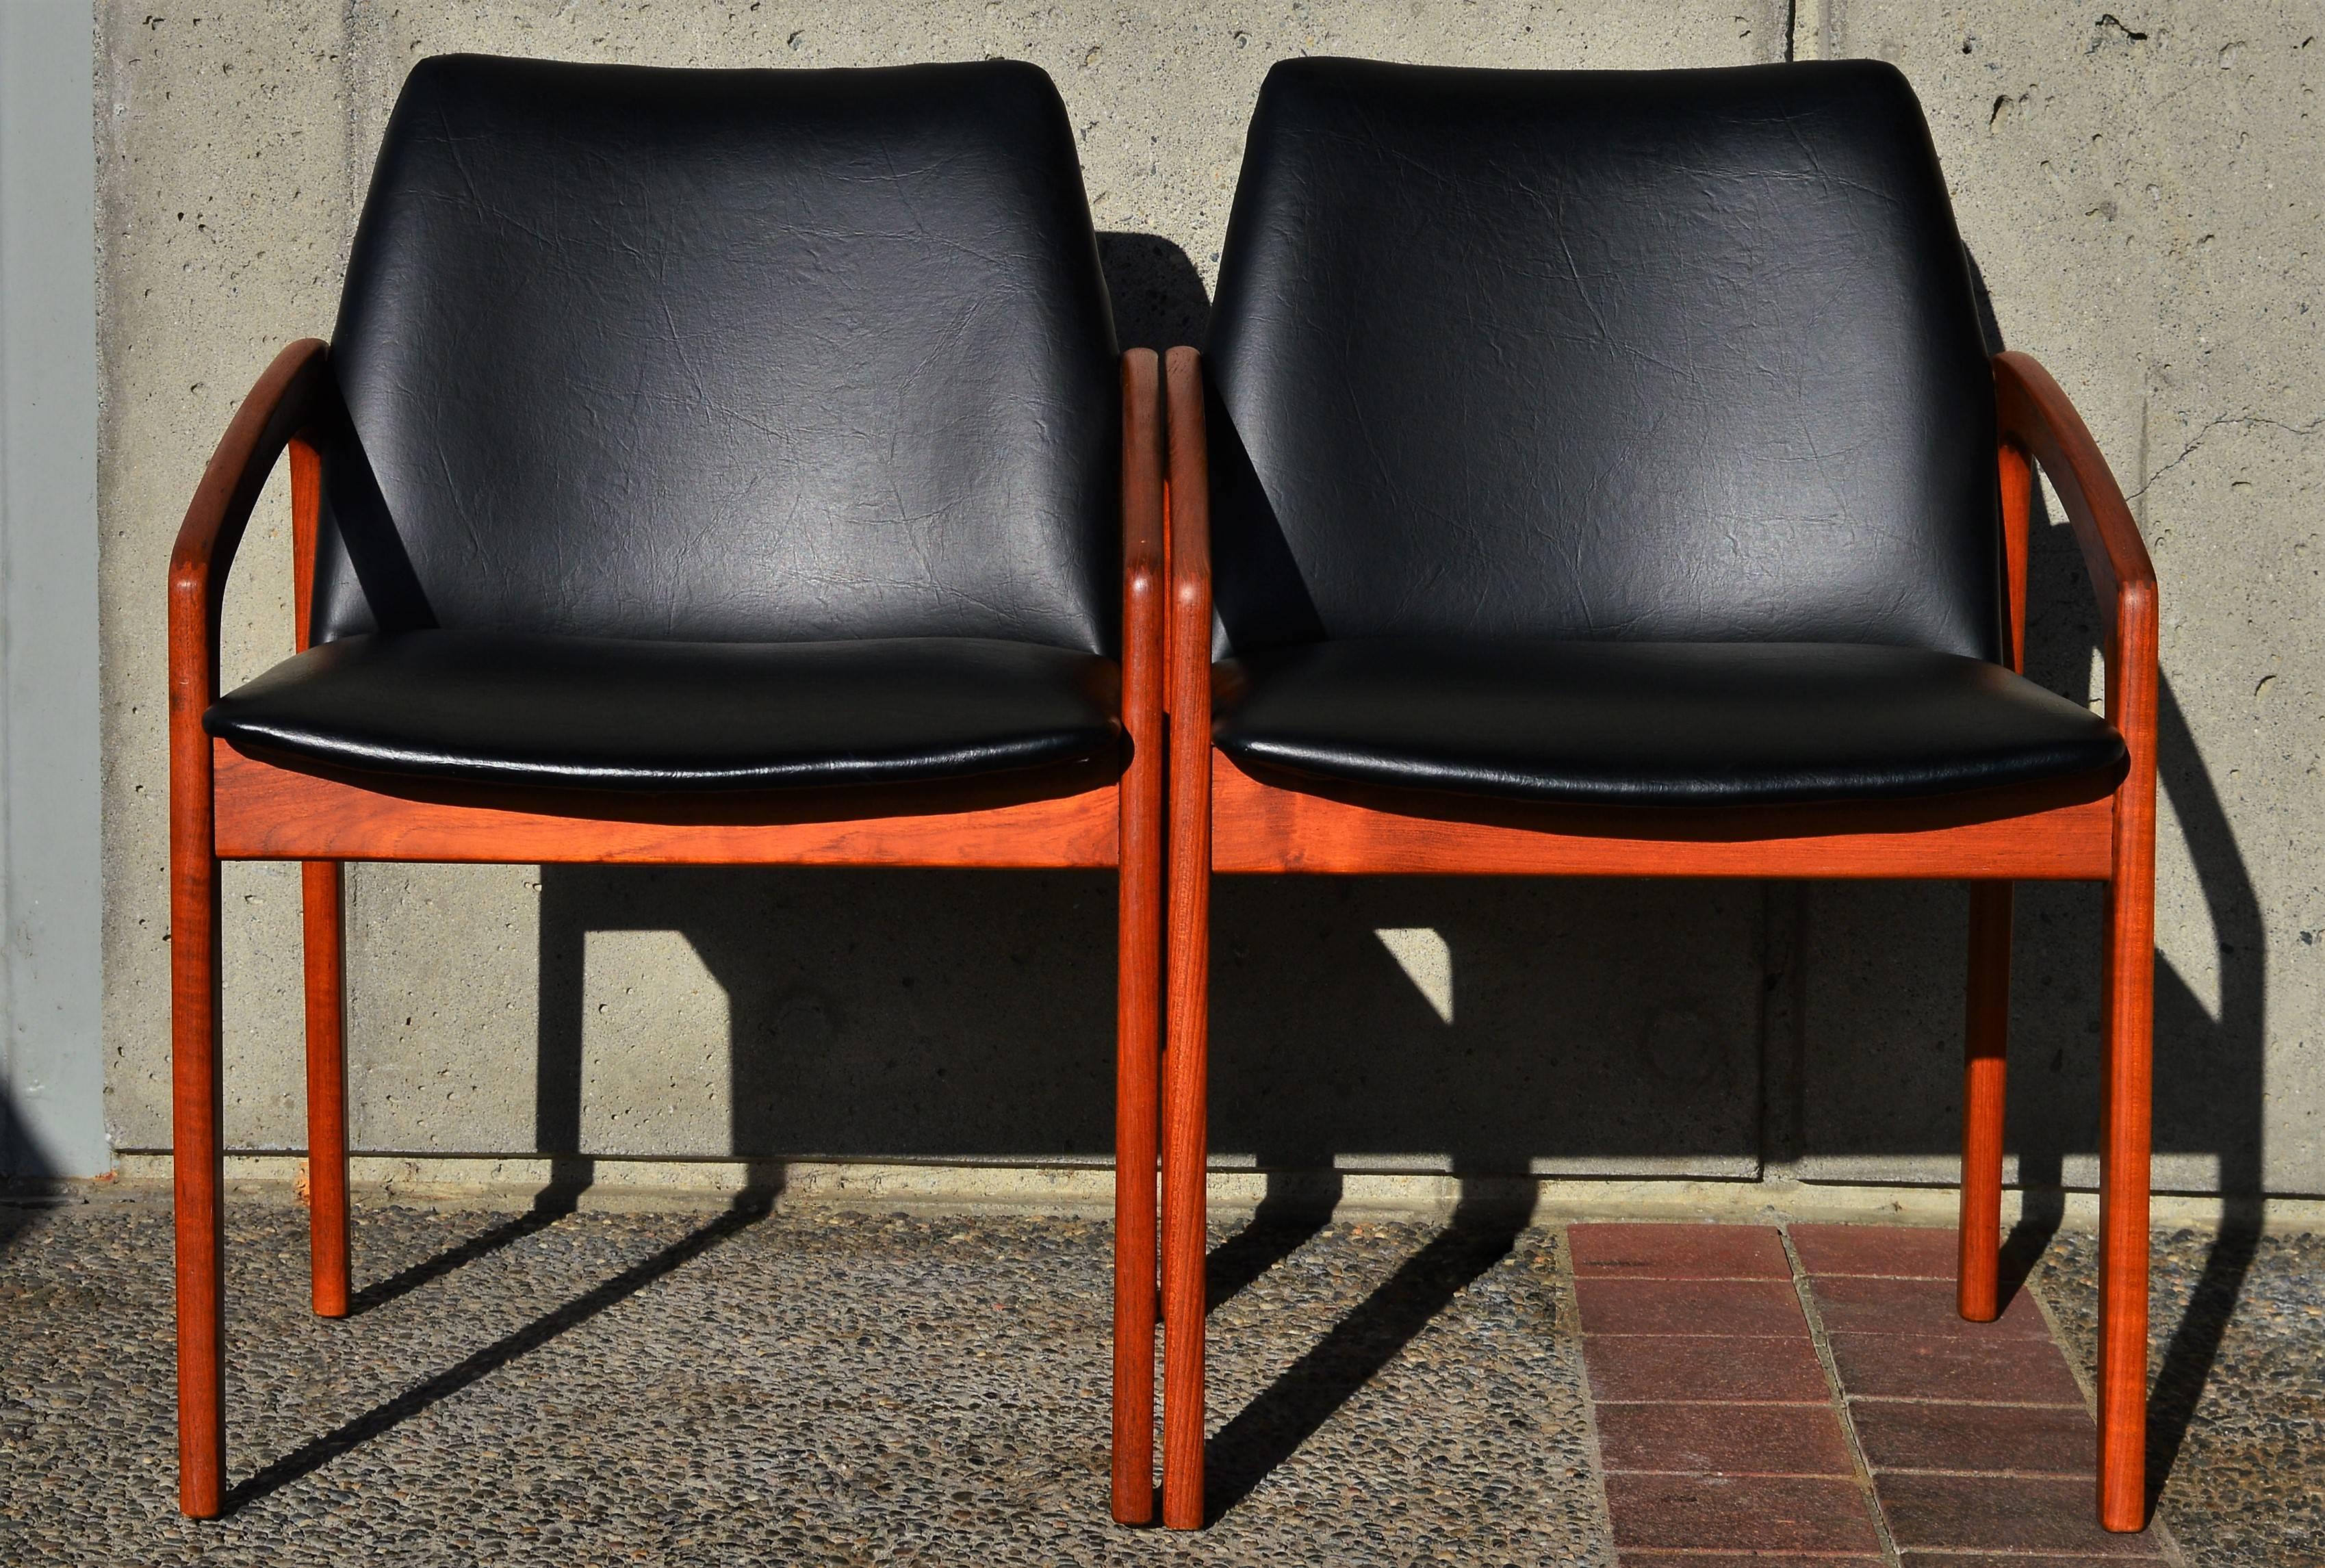 Pair of Kai Kristiansen Teak Carvers or Side Chairs, Danish (Polster)